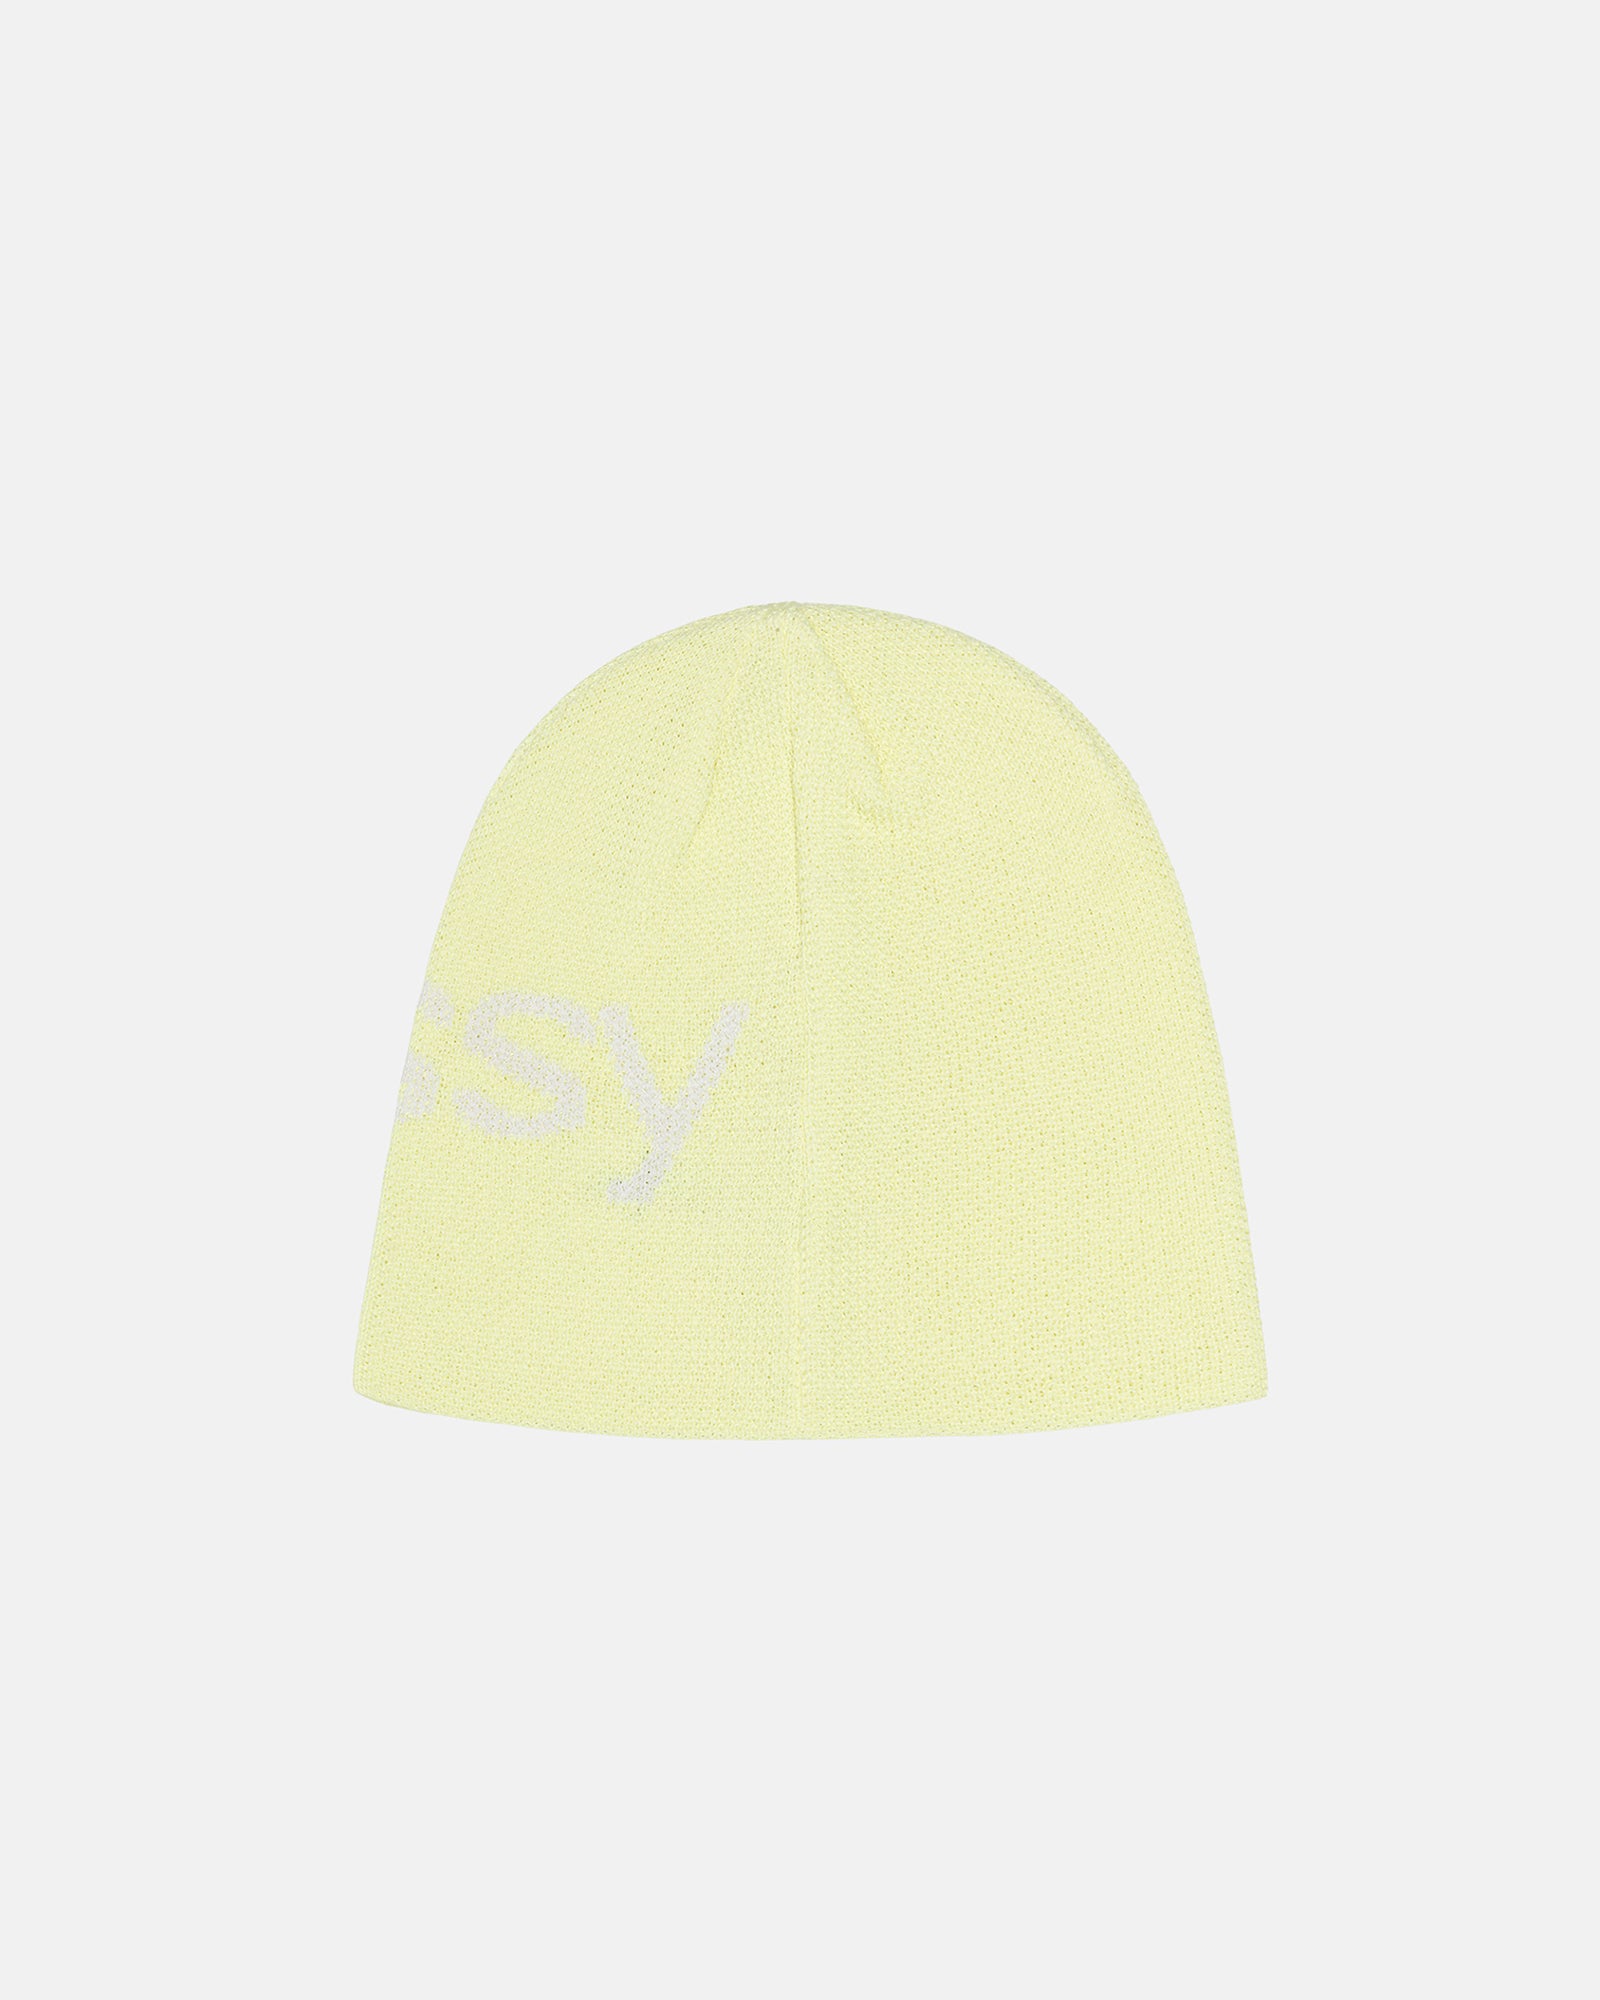 Stüssy Skullcap Helvetica Uv Yellow Headwear